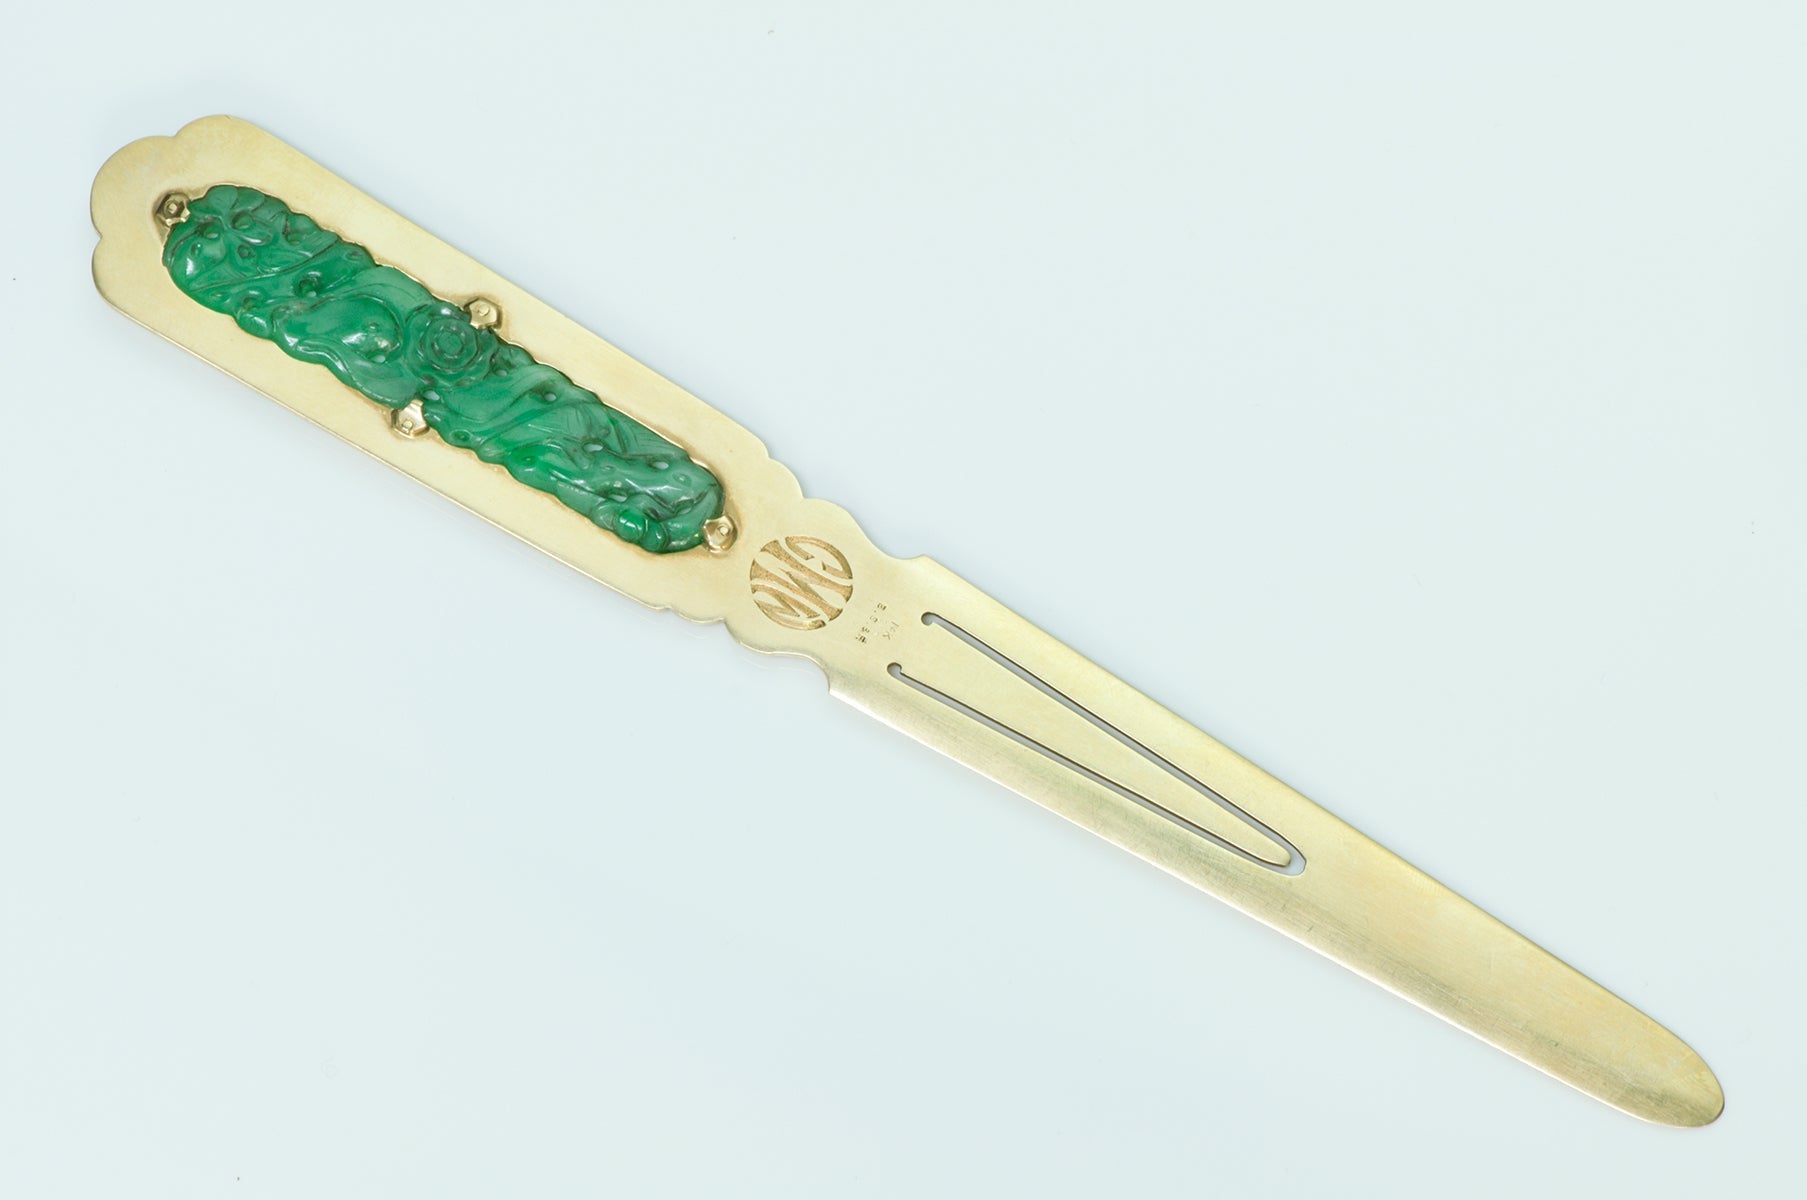 Black Starr & Frost Carved Jade Gold Enamel Letter Opener - DSF Antique Jewelry